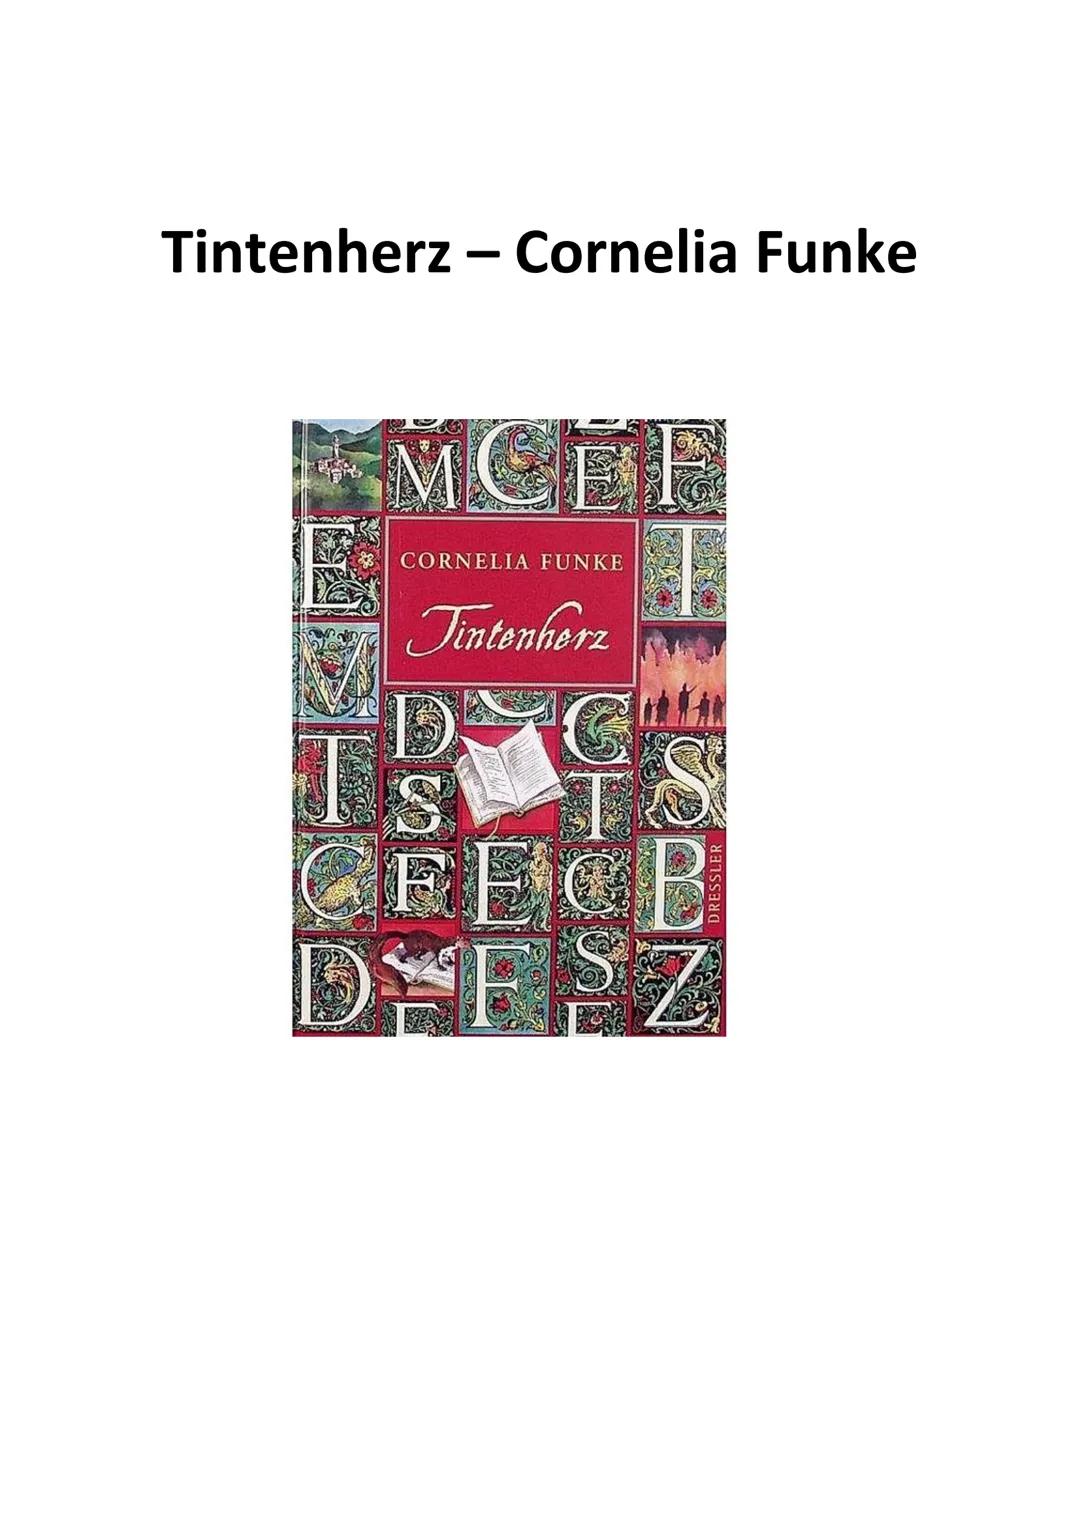 Tintenherz - Cornelia Funke
EMCEF
CORNELIA FUNKE
Tintenherz
C
FECB
D*FSZ Allgemein
Fantasybuch
Erstes Buch der Tintenwelt-Triologie (2. Buch